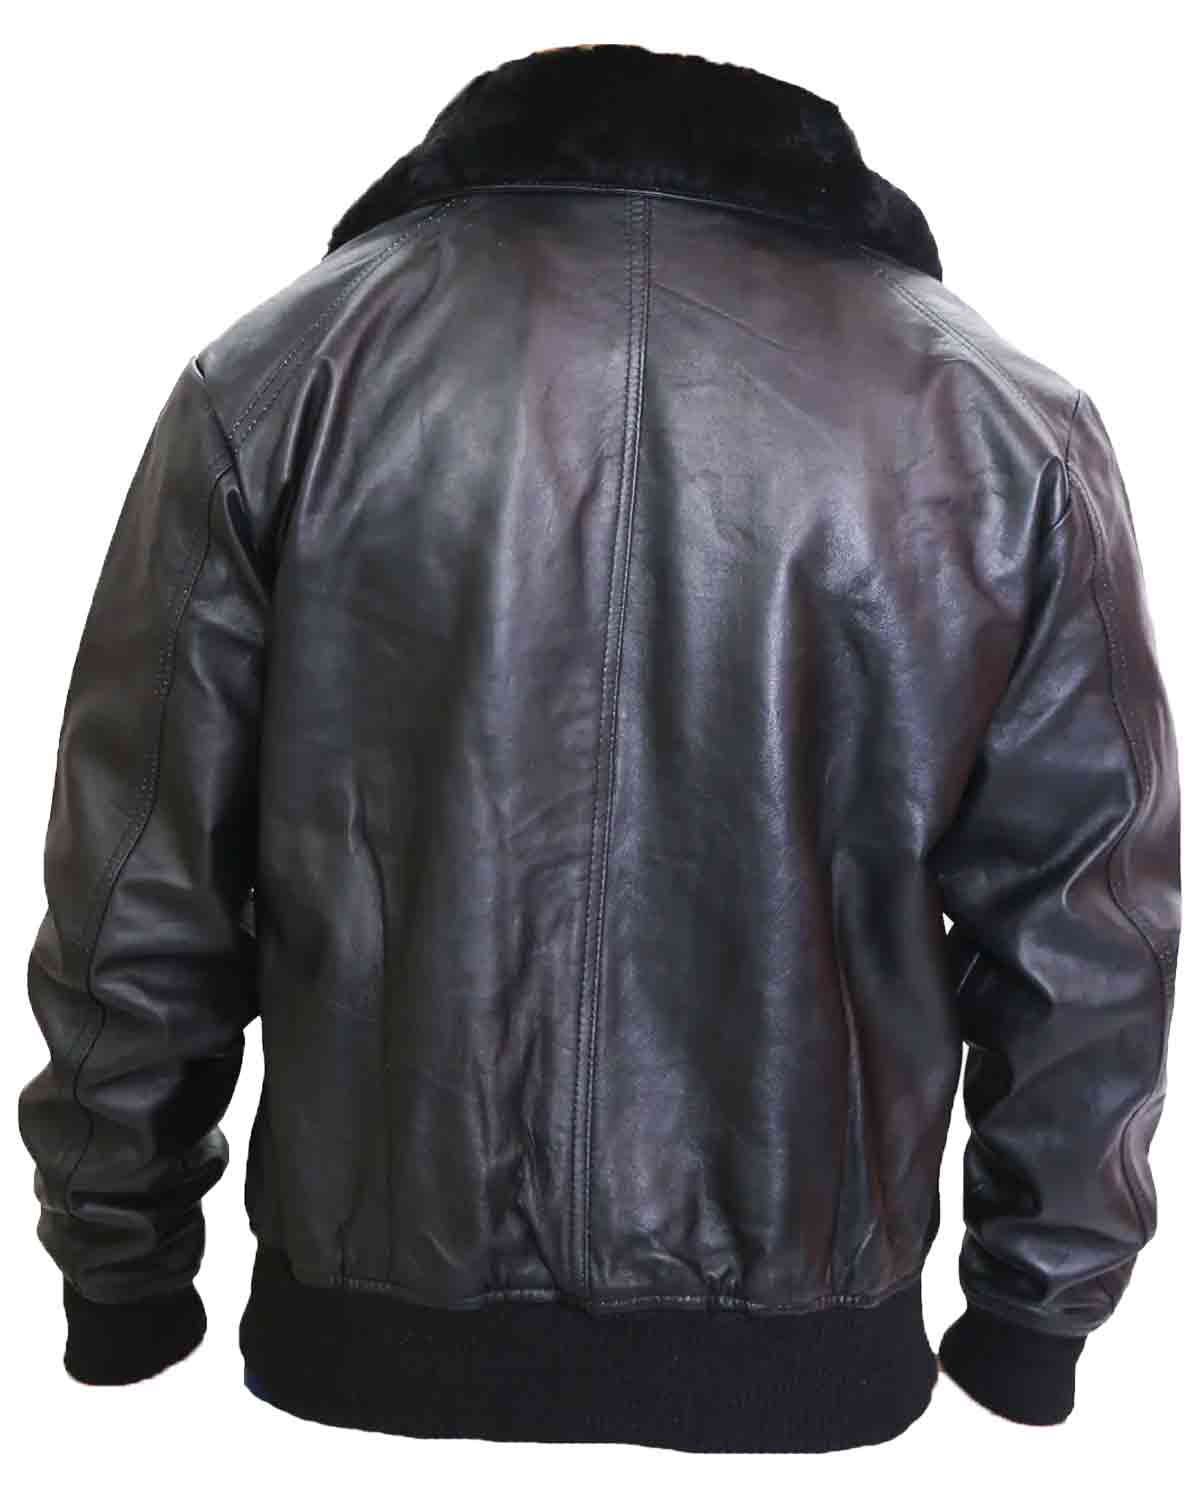 Elite Men's G1 Navy Black Leather Jacket